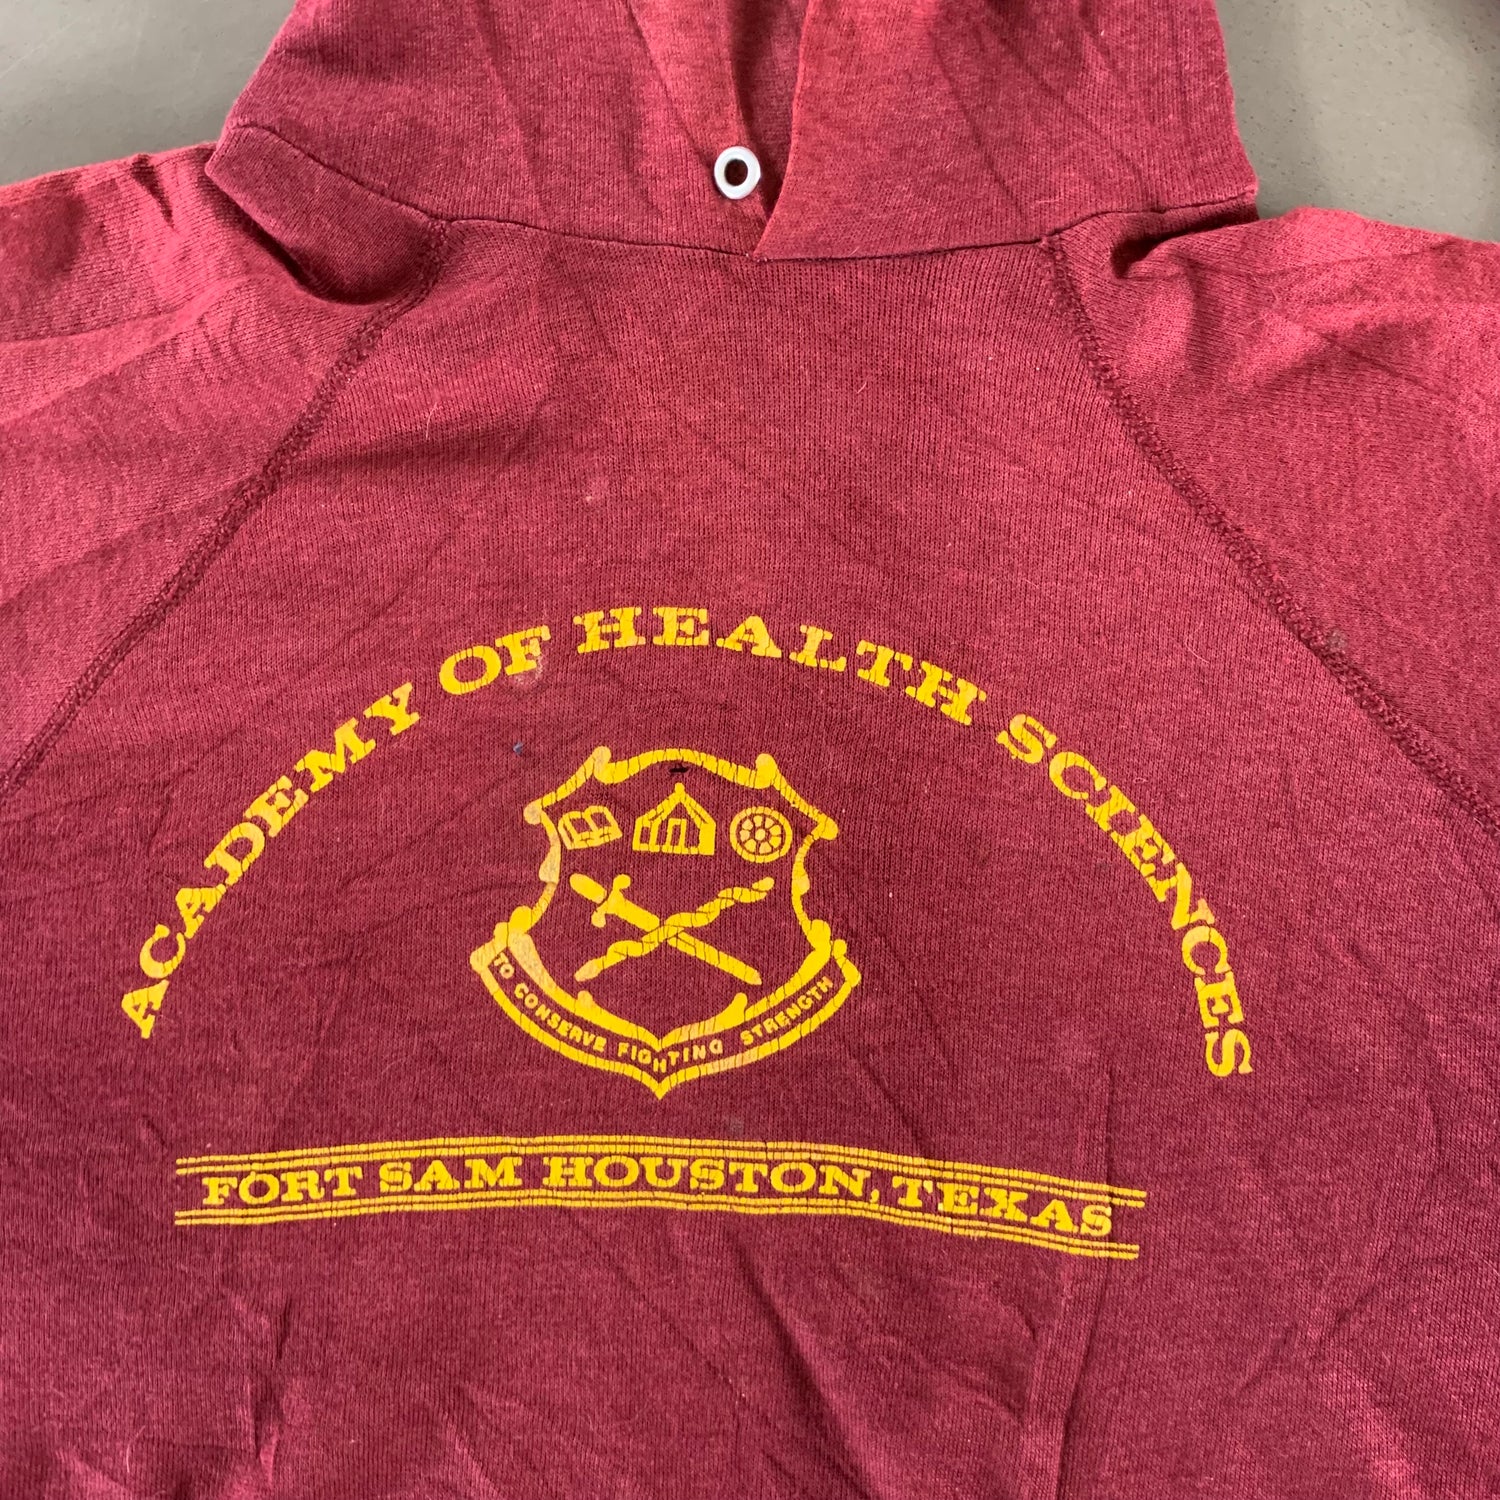 Vintage 1980s Academy of Health Sciences Sweatshirt size XL